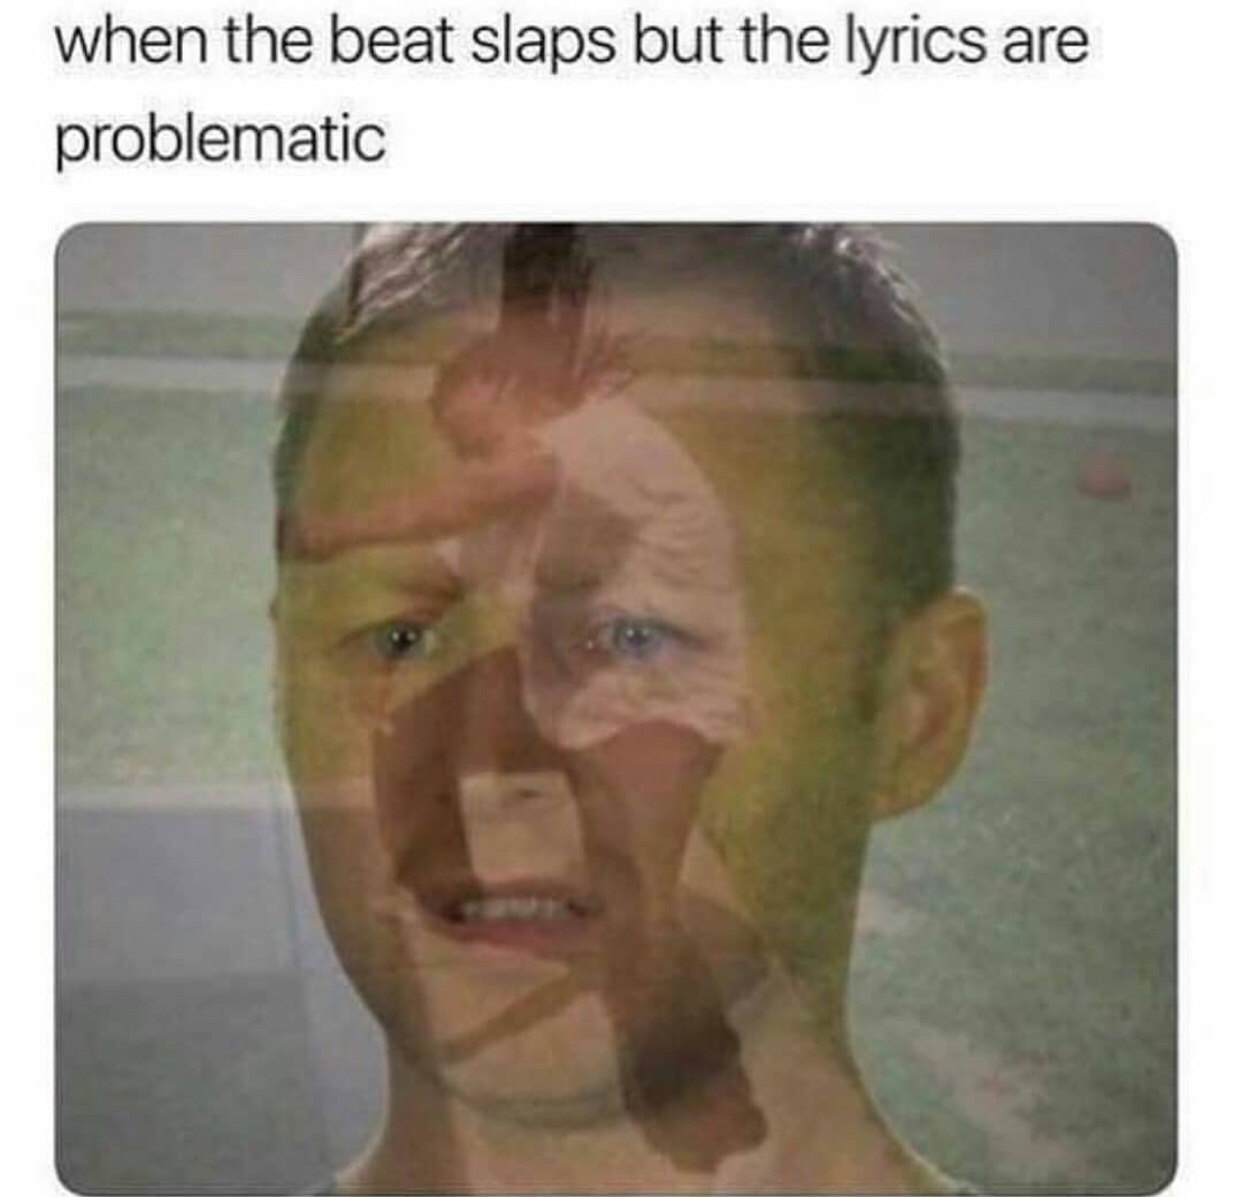 beat slaps but the lyrics - when the beat slaps but the lyrics are problematic